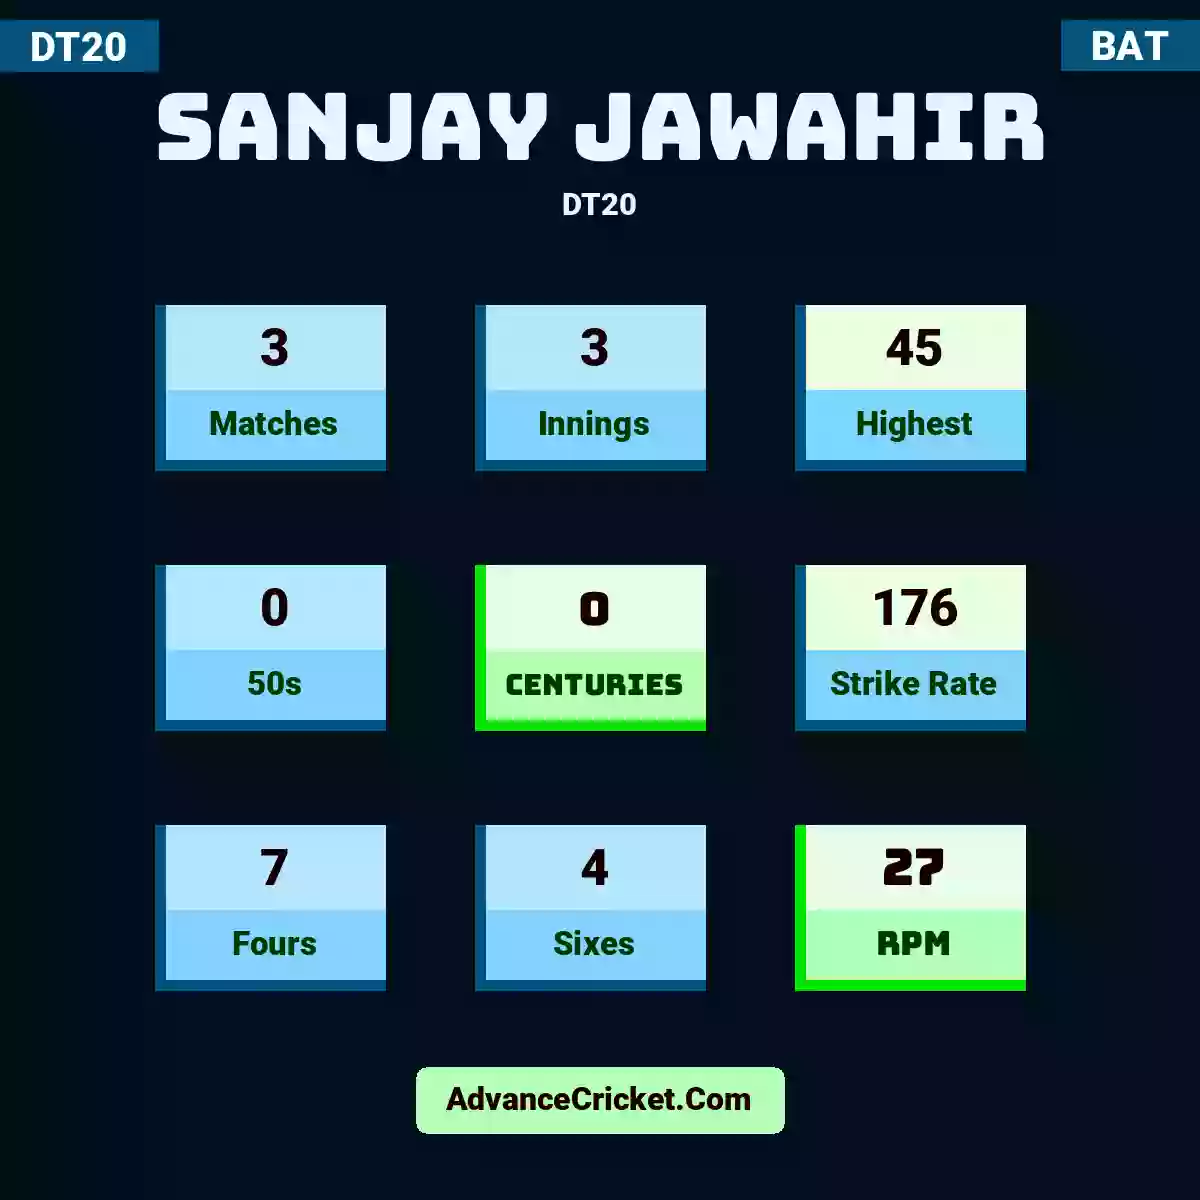 Sanjay Jawahir DT20 , Sanjay Jawahir played 3 matches, scored 45 runs as highest, 0 half-centuries, and 0 centuries, with a strike rate of 176. S.Jawahir hit 7 fours and 4 sixes, with an RPM of 27.